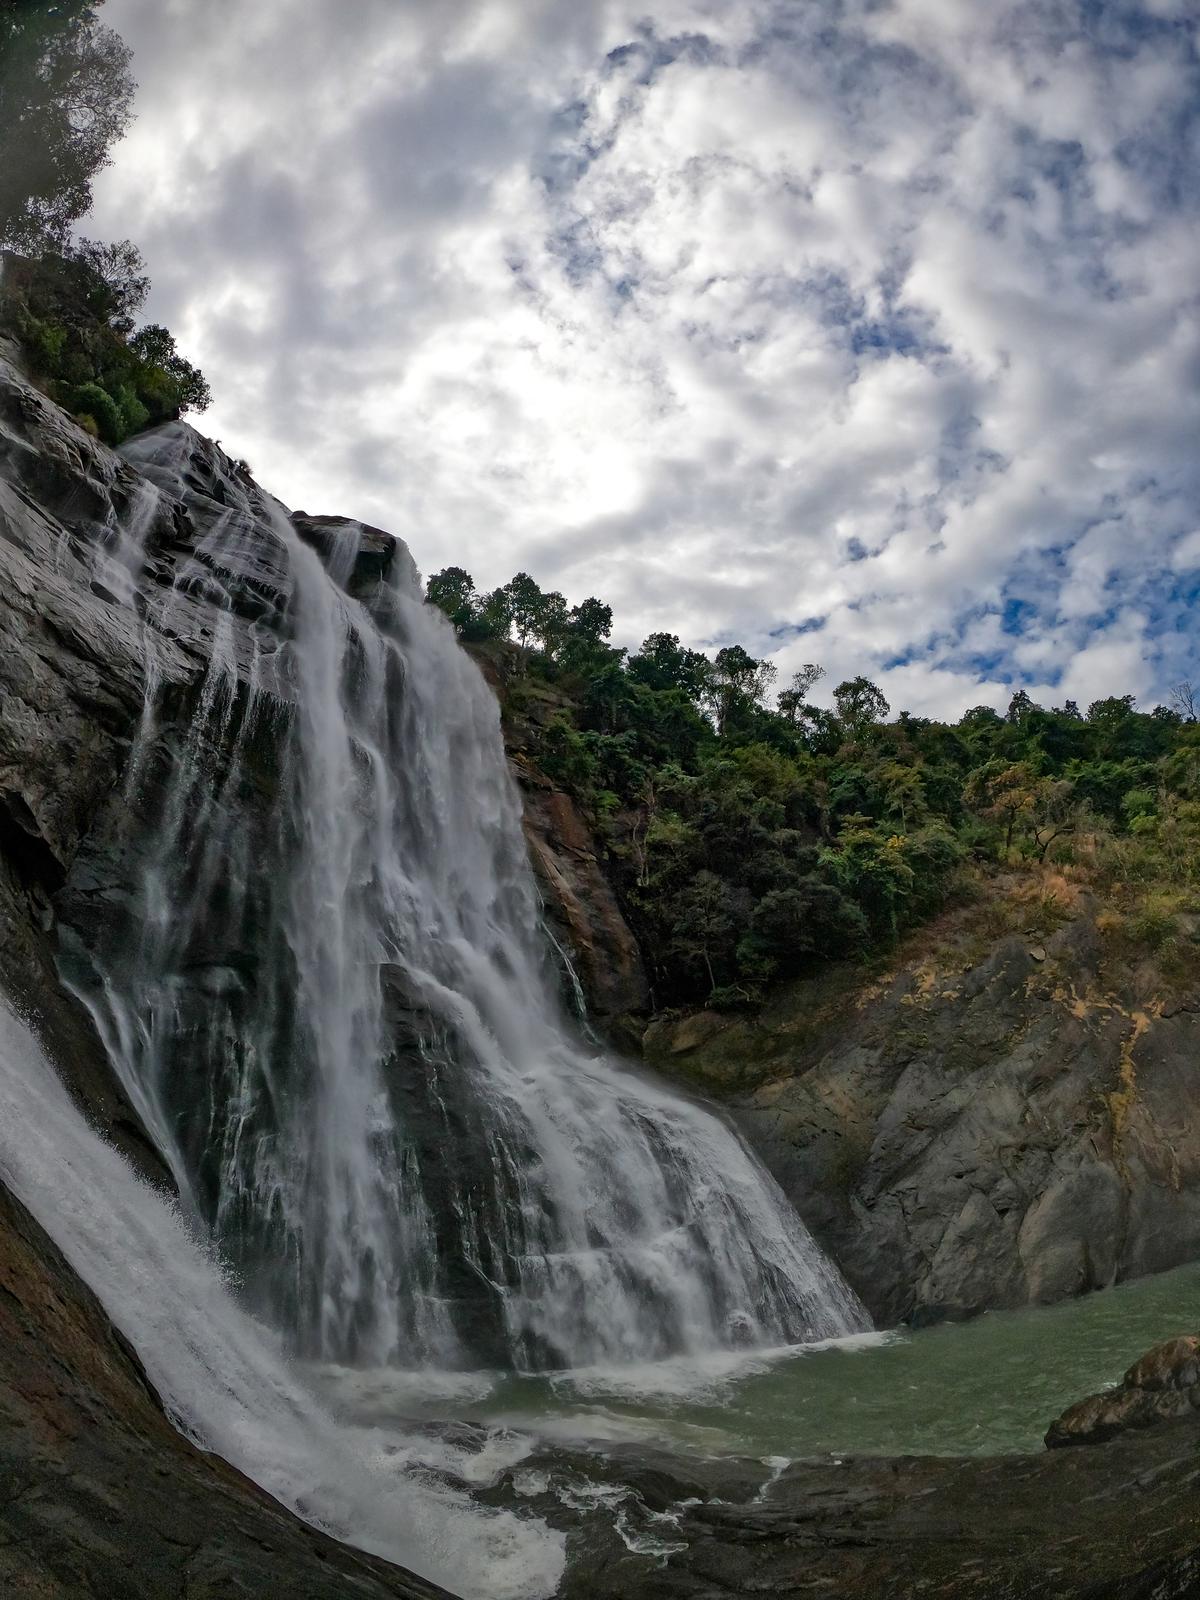 Tarabu waterfalls, near busuputtu village, in Eastern Ghats of Andhra Pradesh.